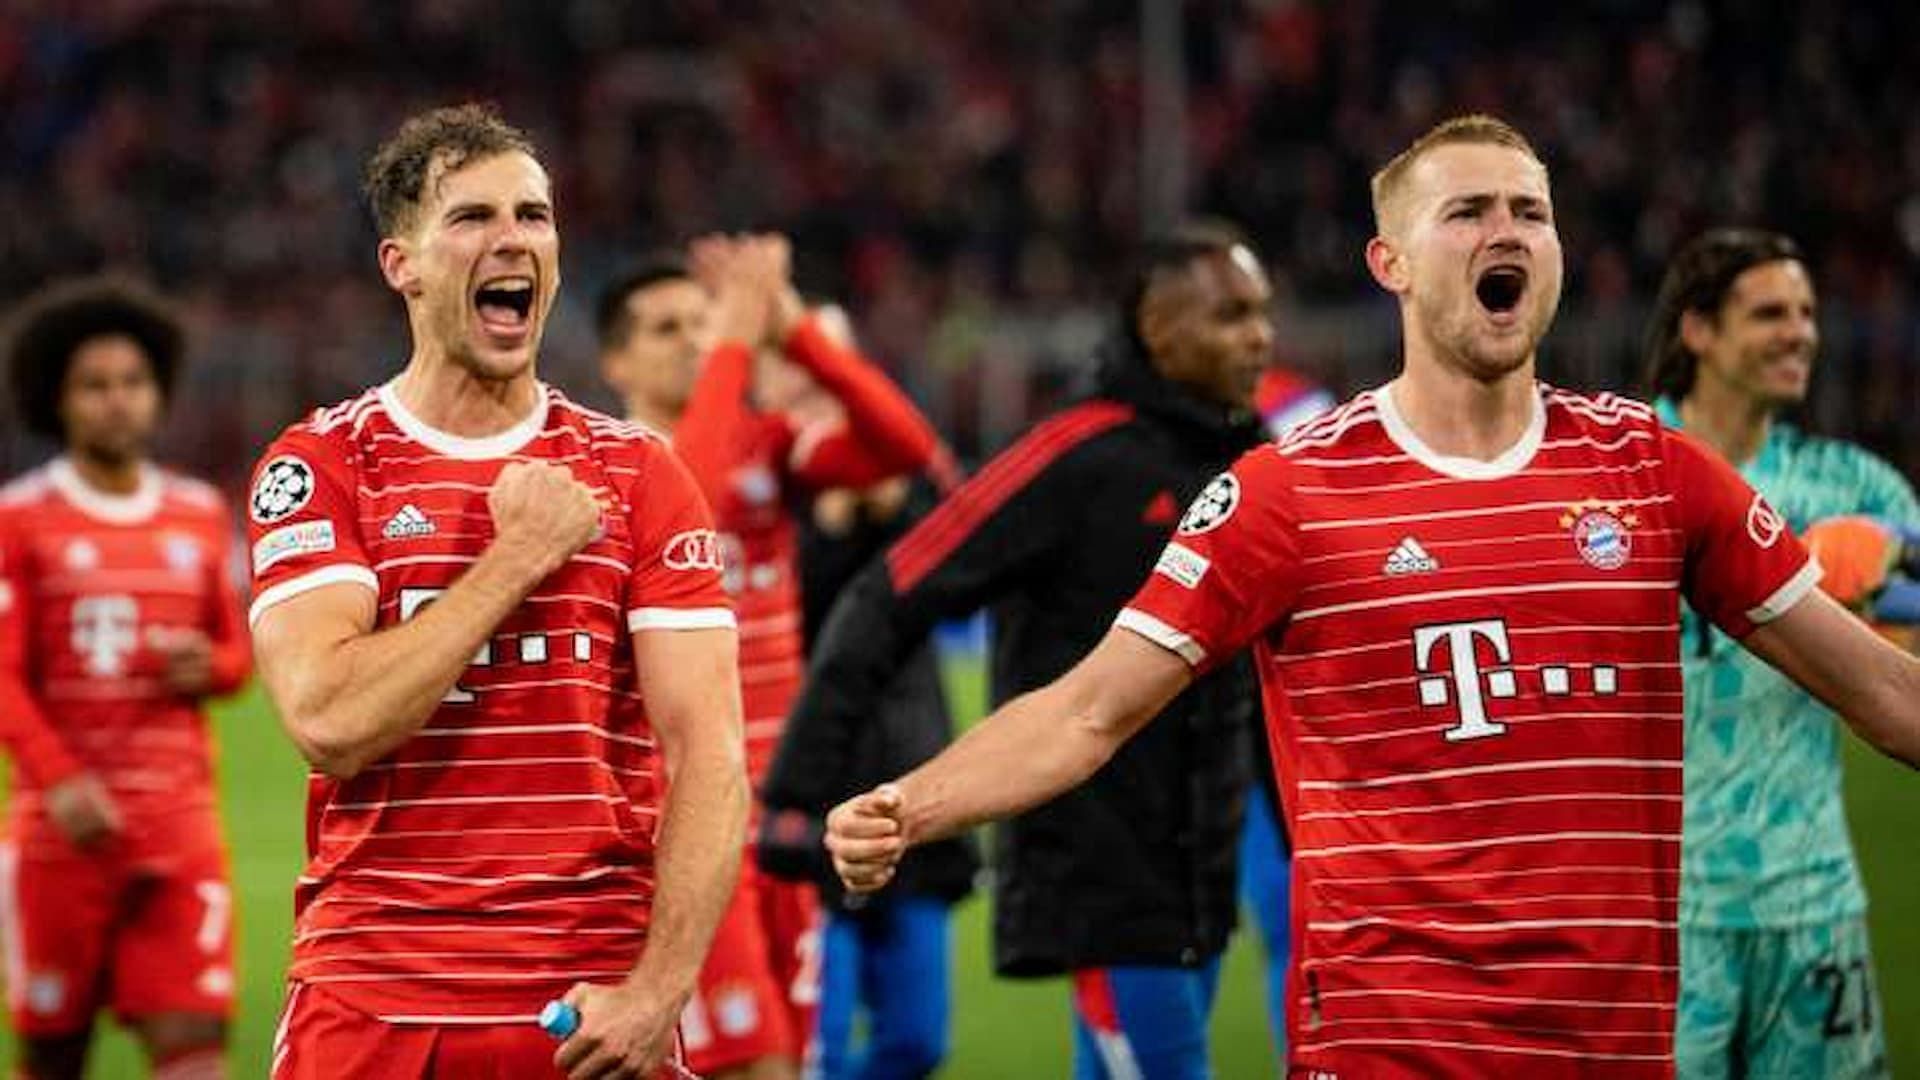 Bayern Munich players celebrating a crucial victory (Image via Getty)